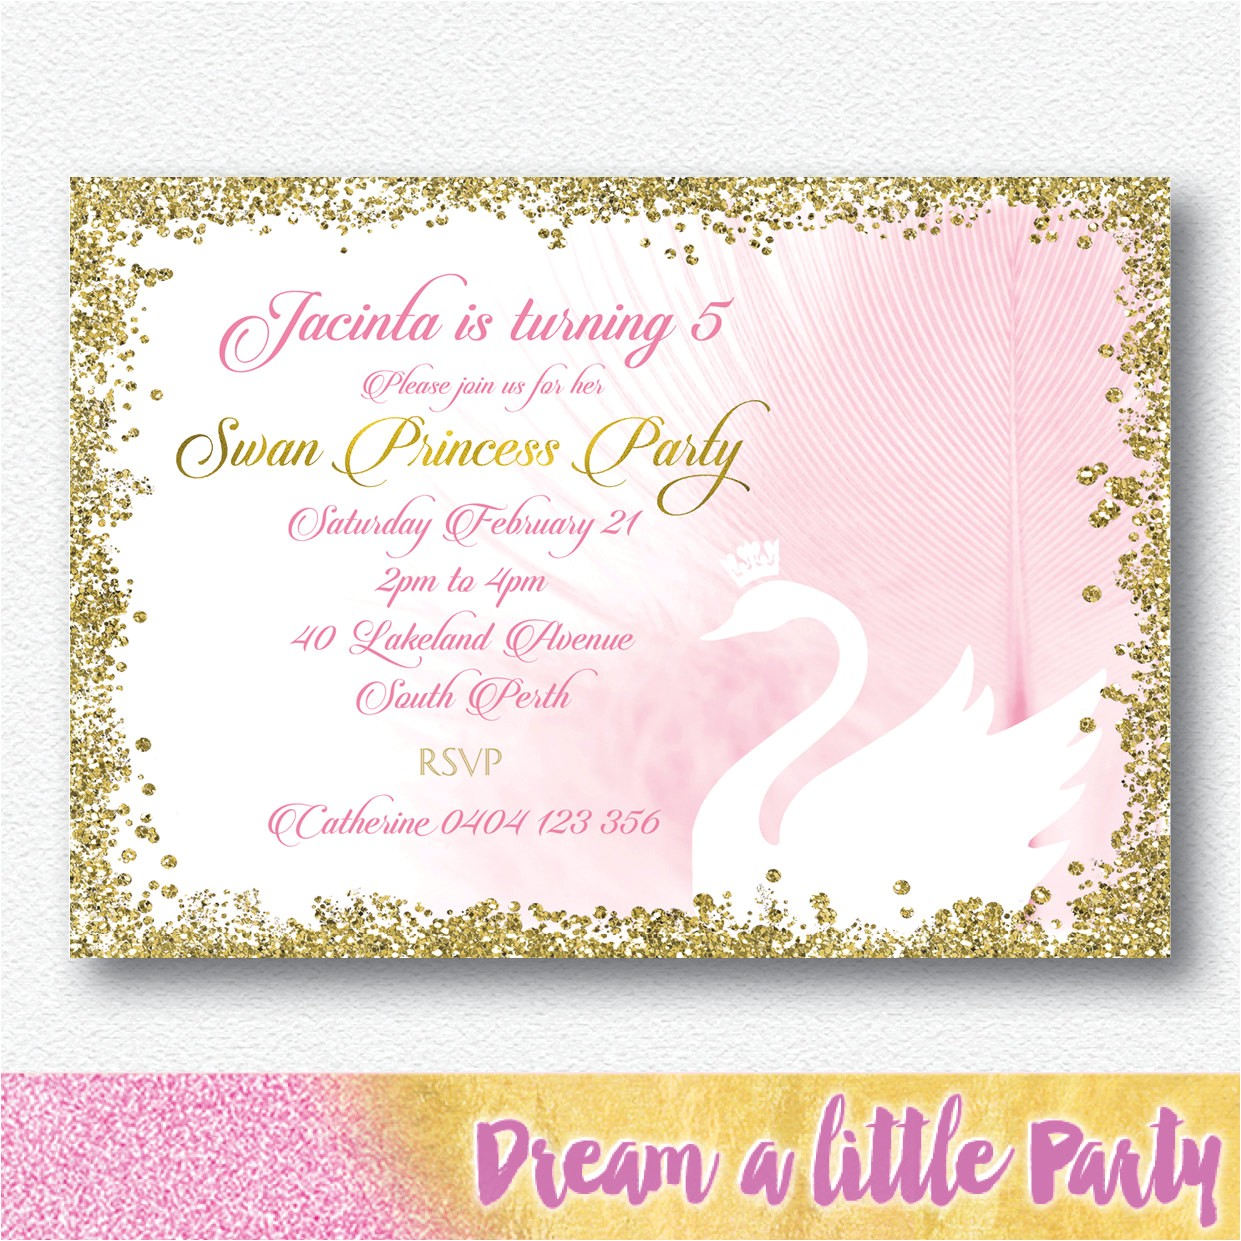 swan princess party invitation